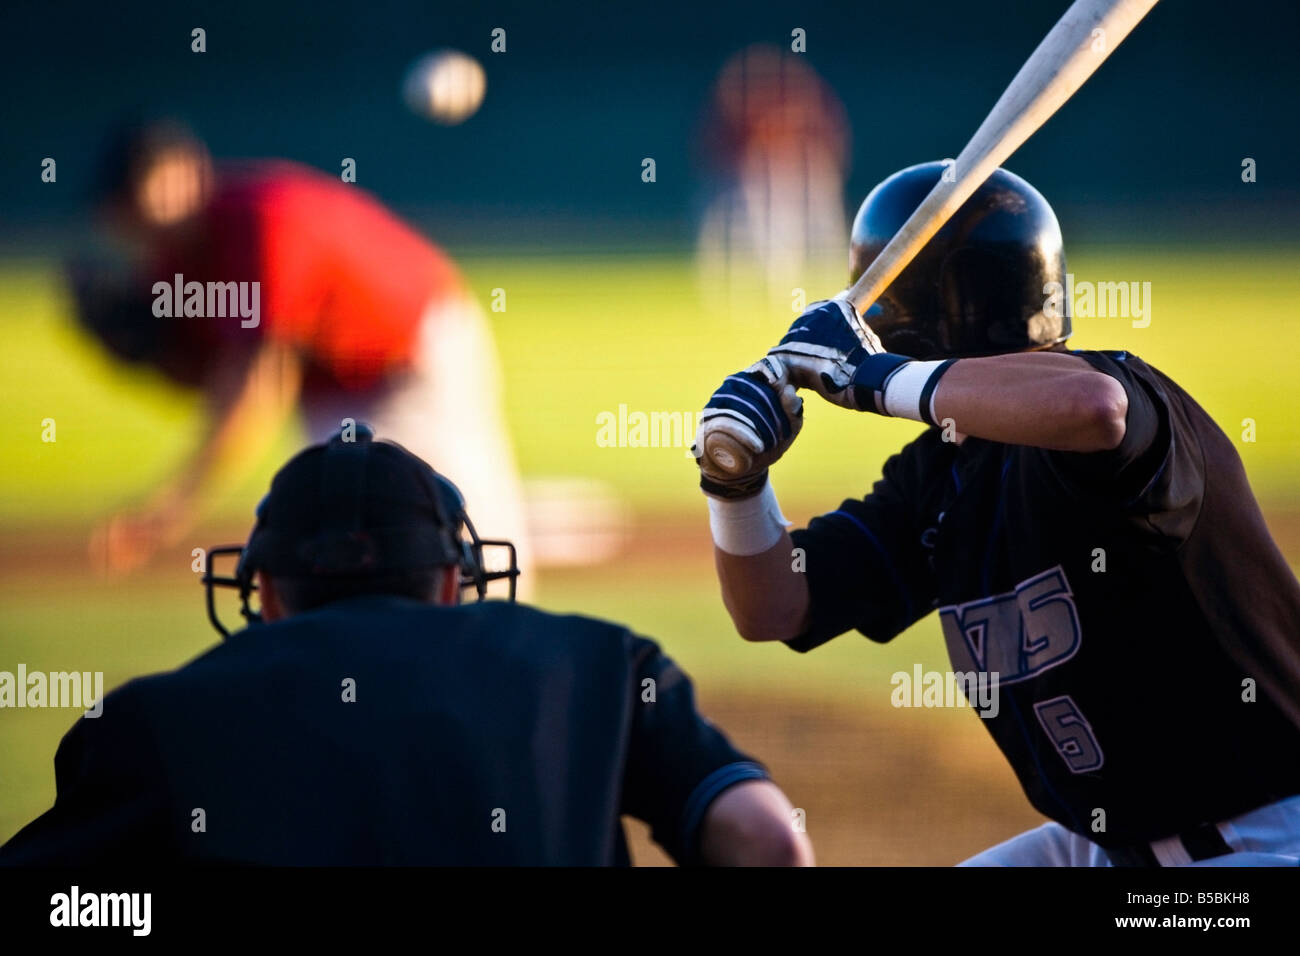 Baseball player up to bat Stock Photo